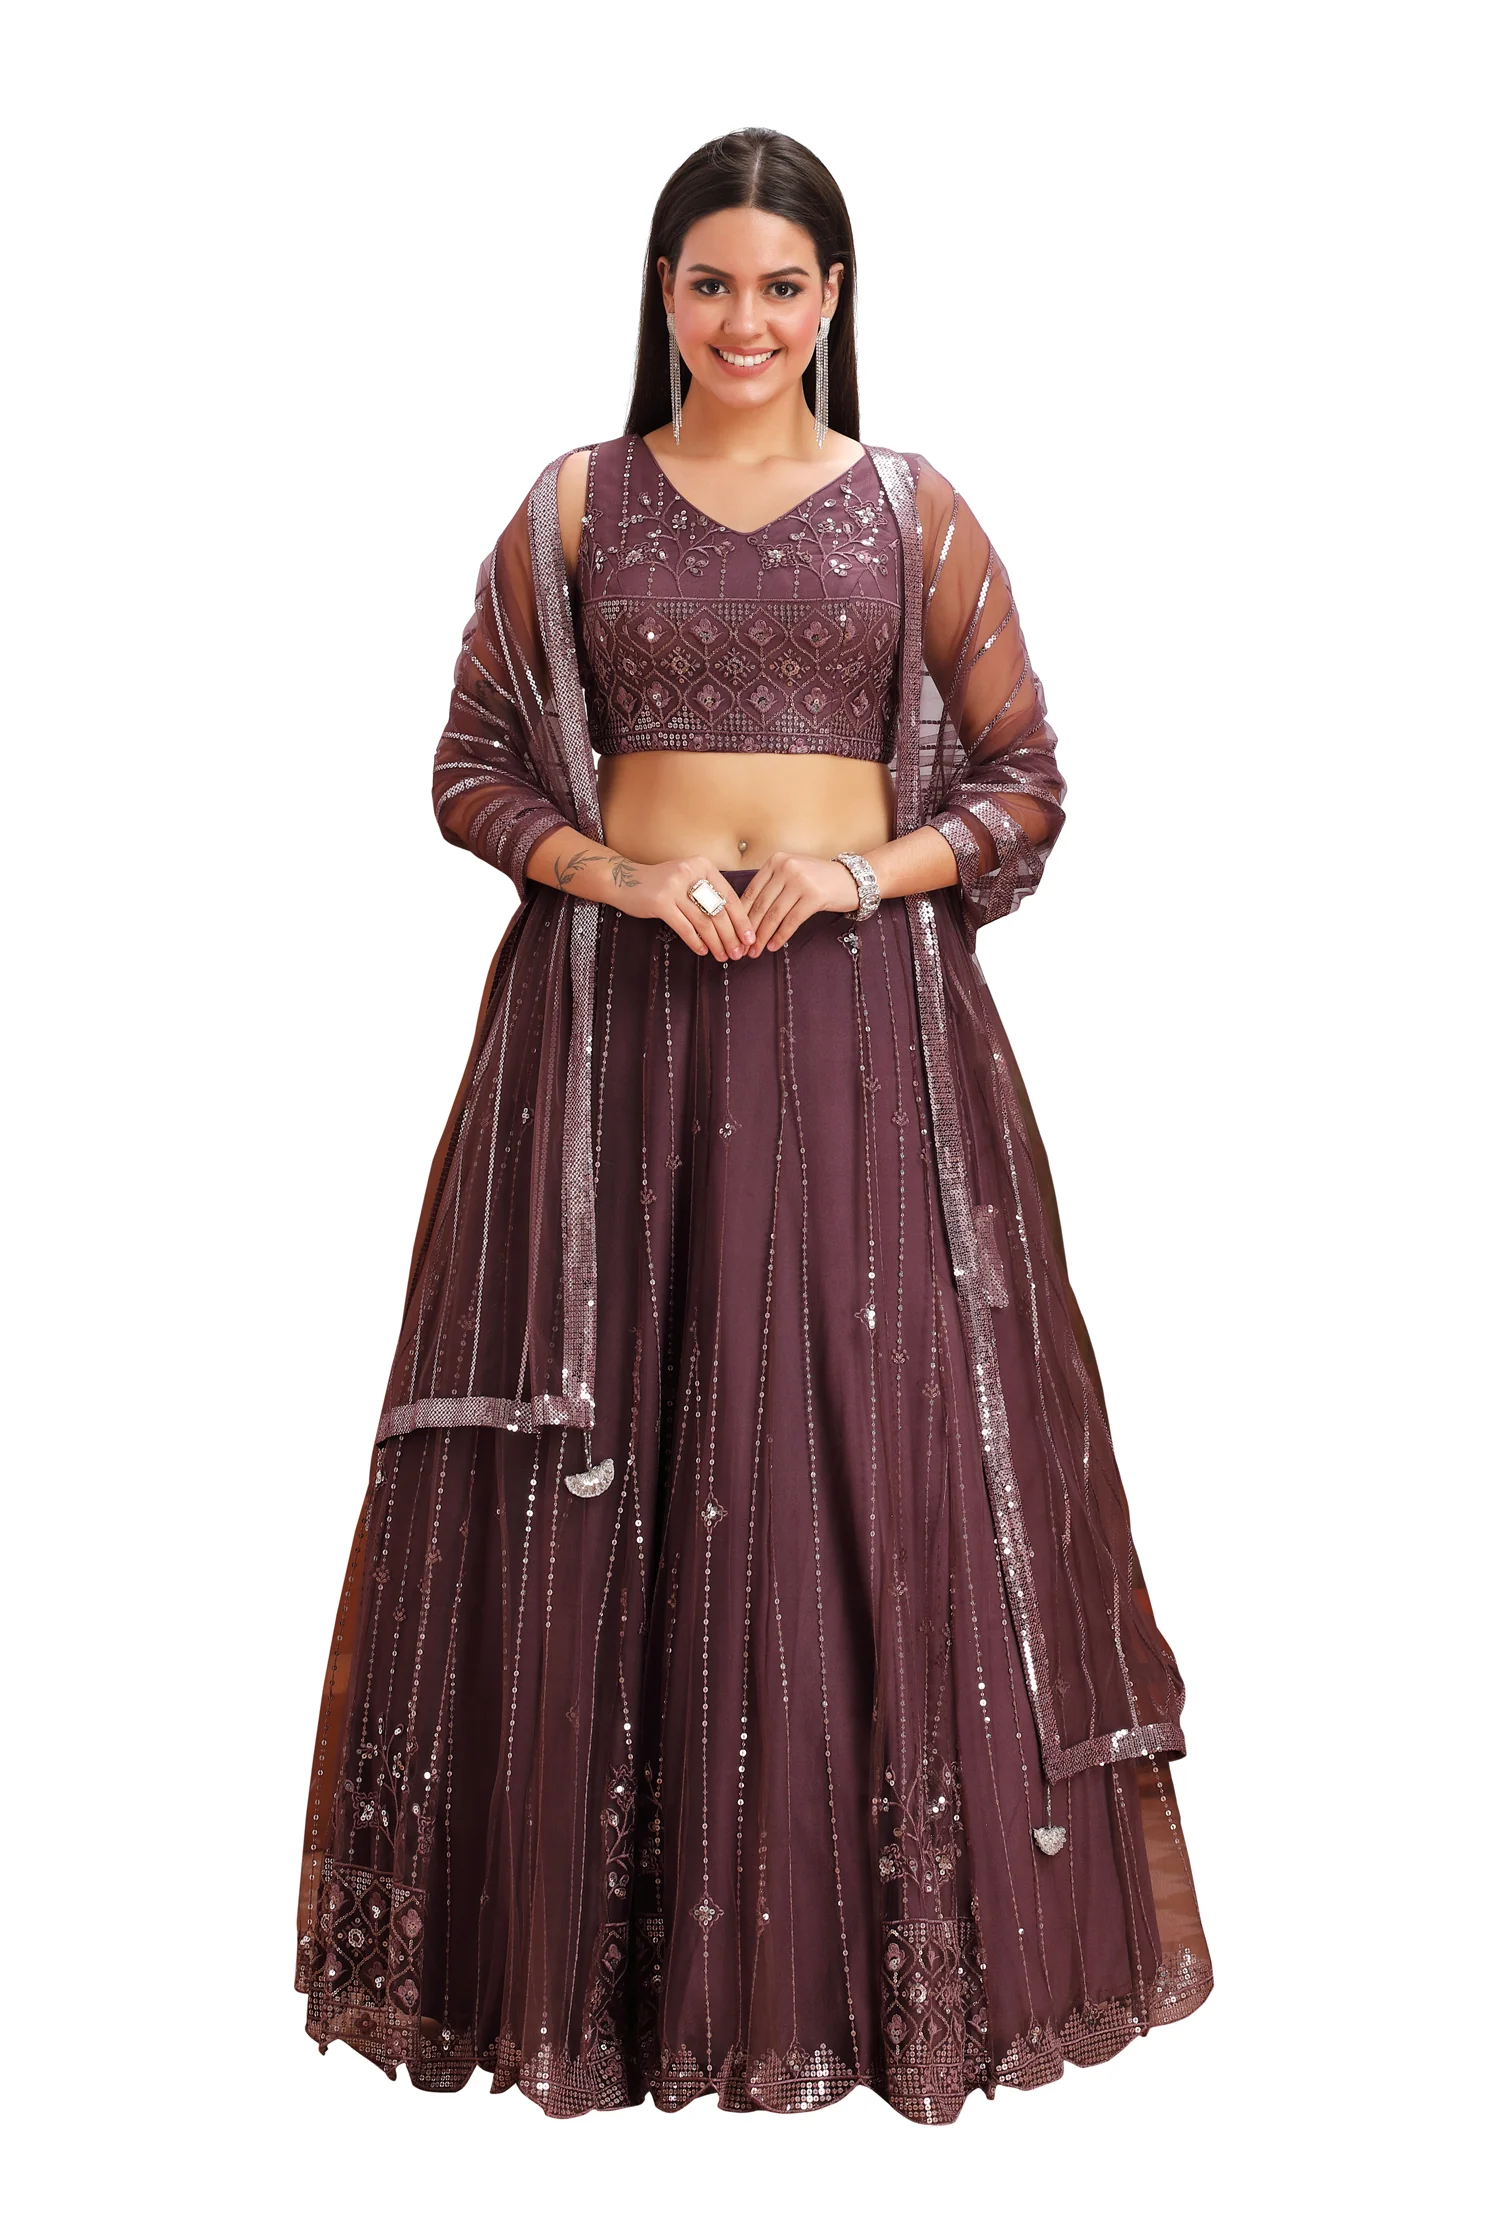 Dresses for Mehendi: Celebrate in Style